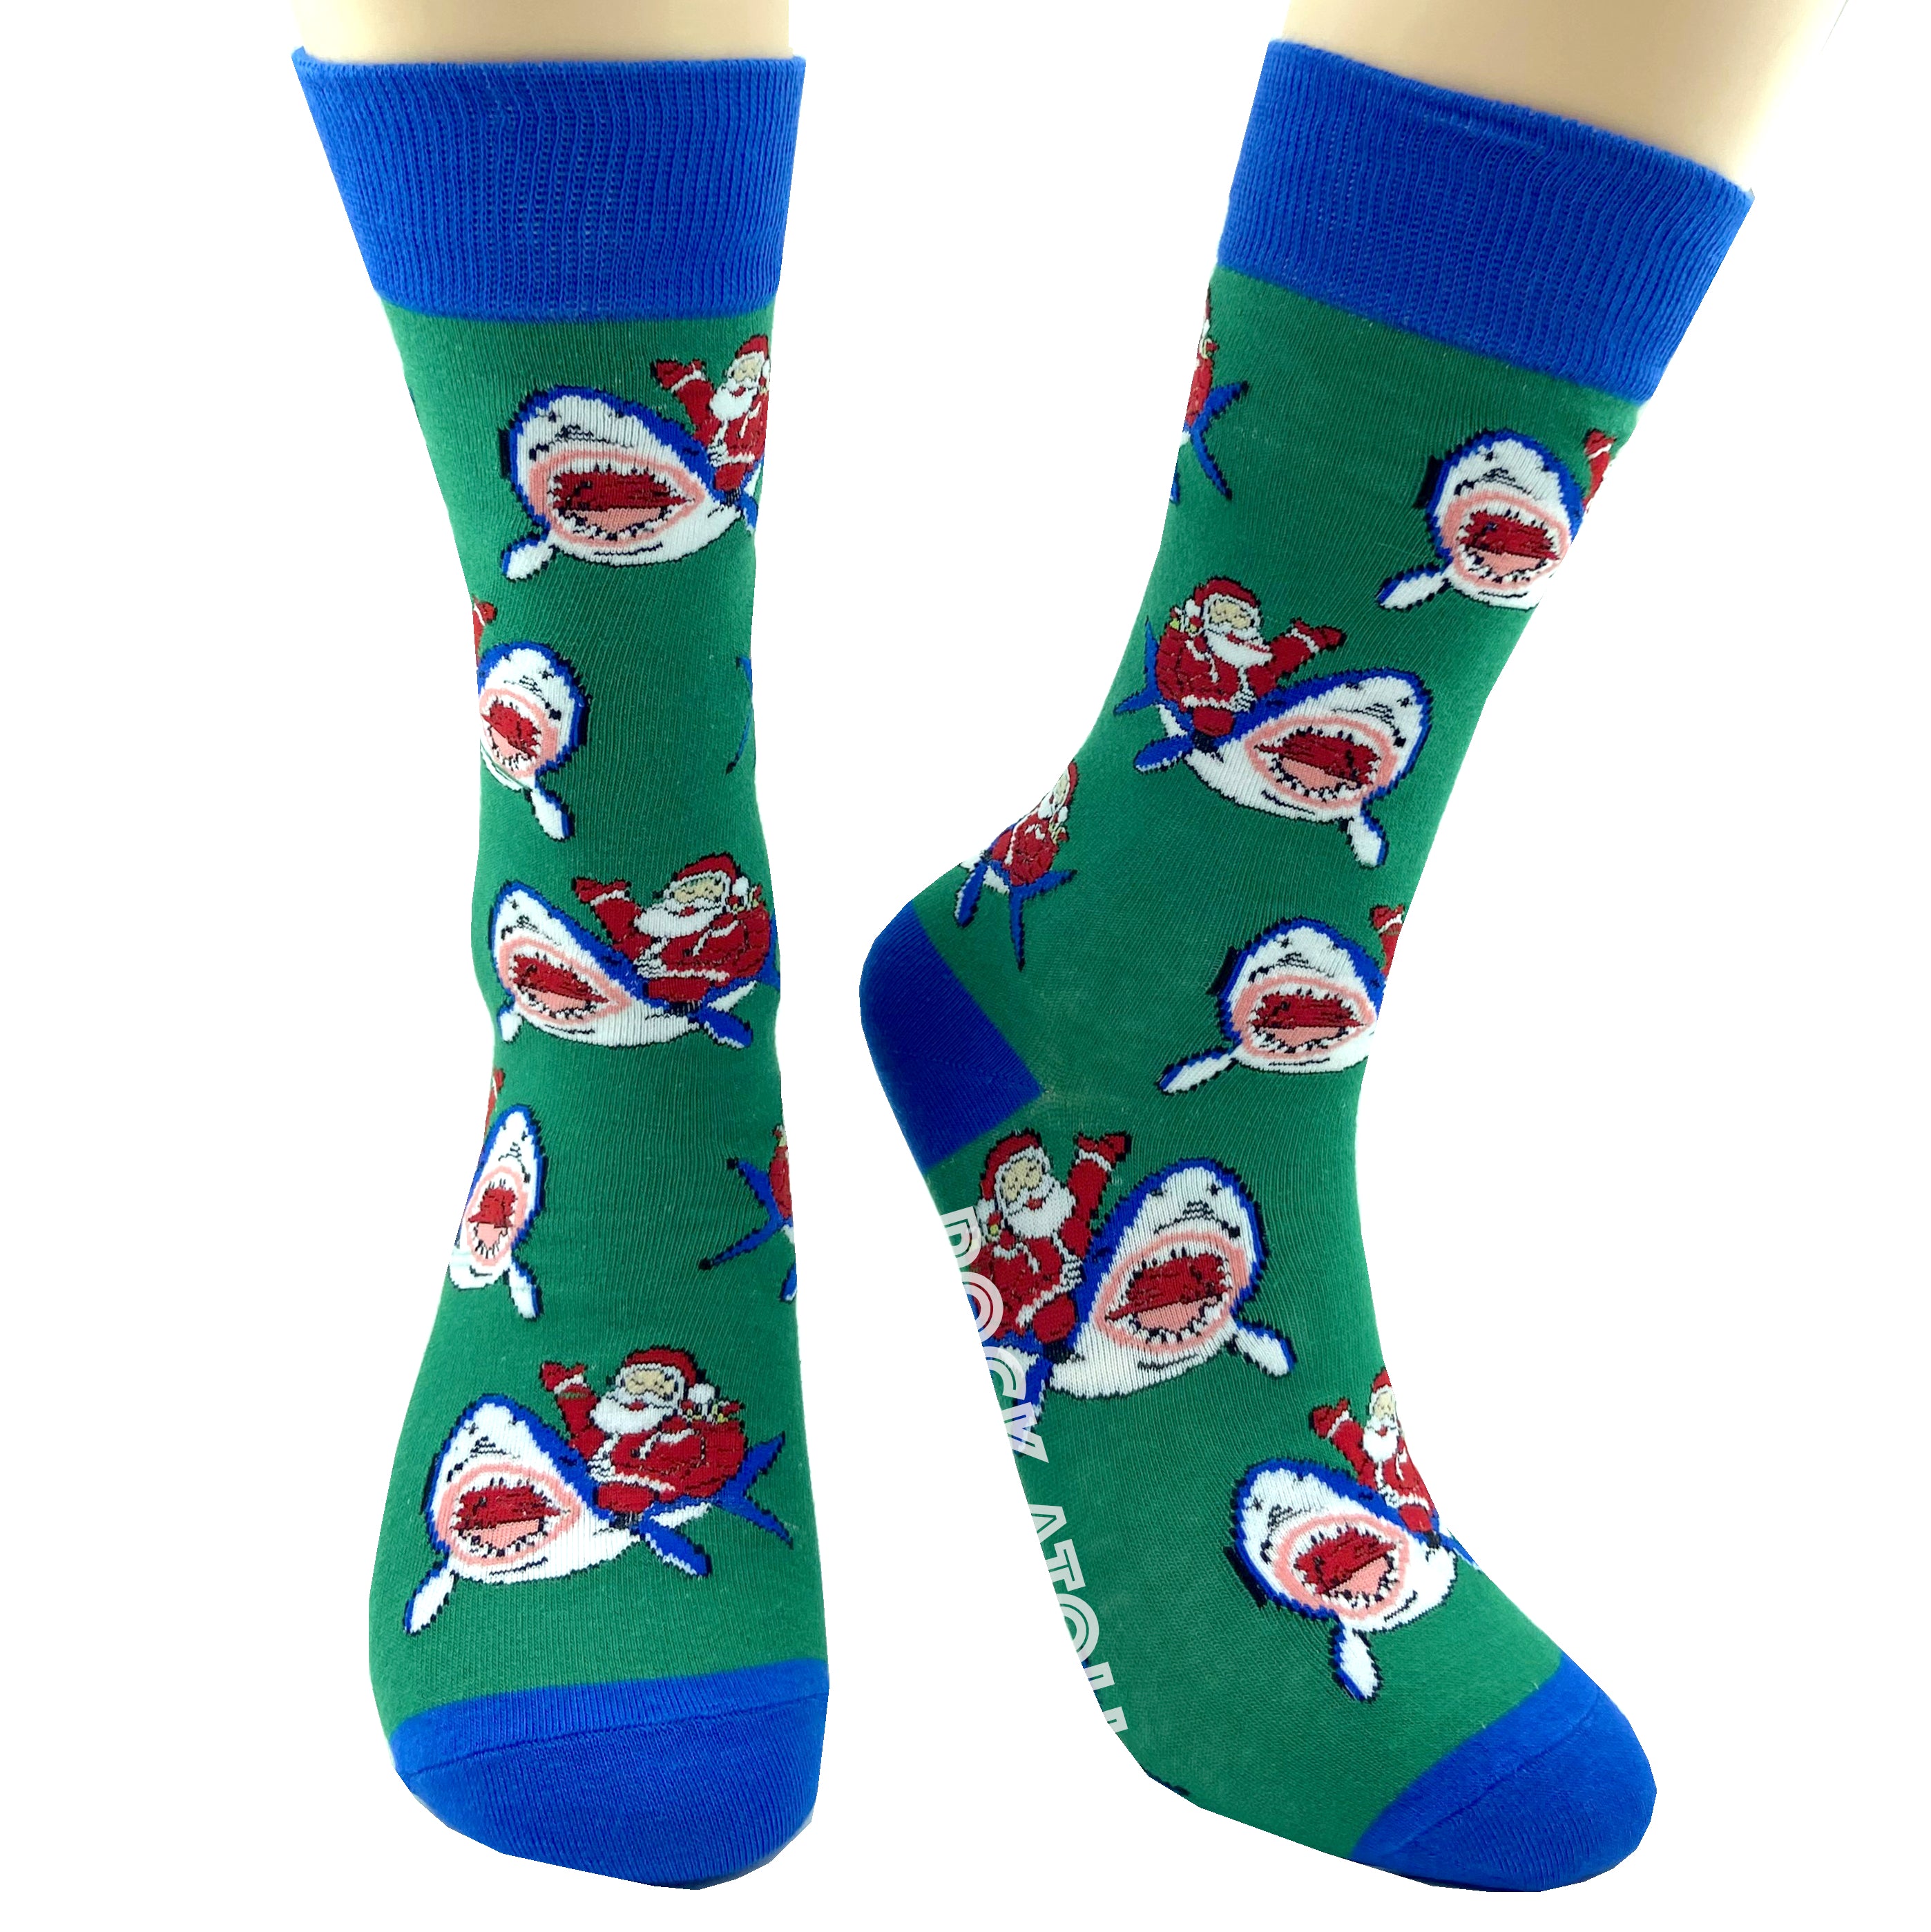 Christmas Themed Santas Riding Sharks Patterned Novelty Socks in Green